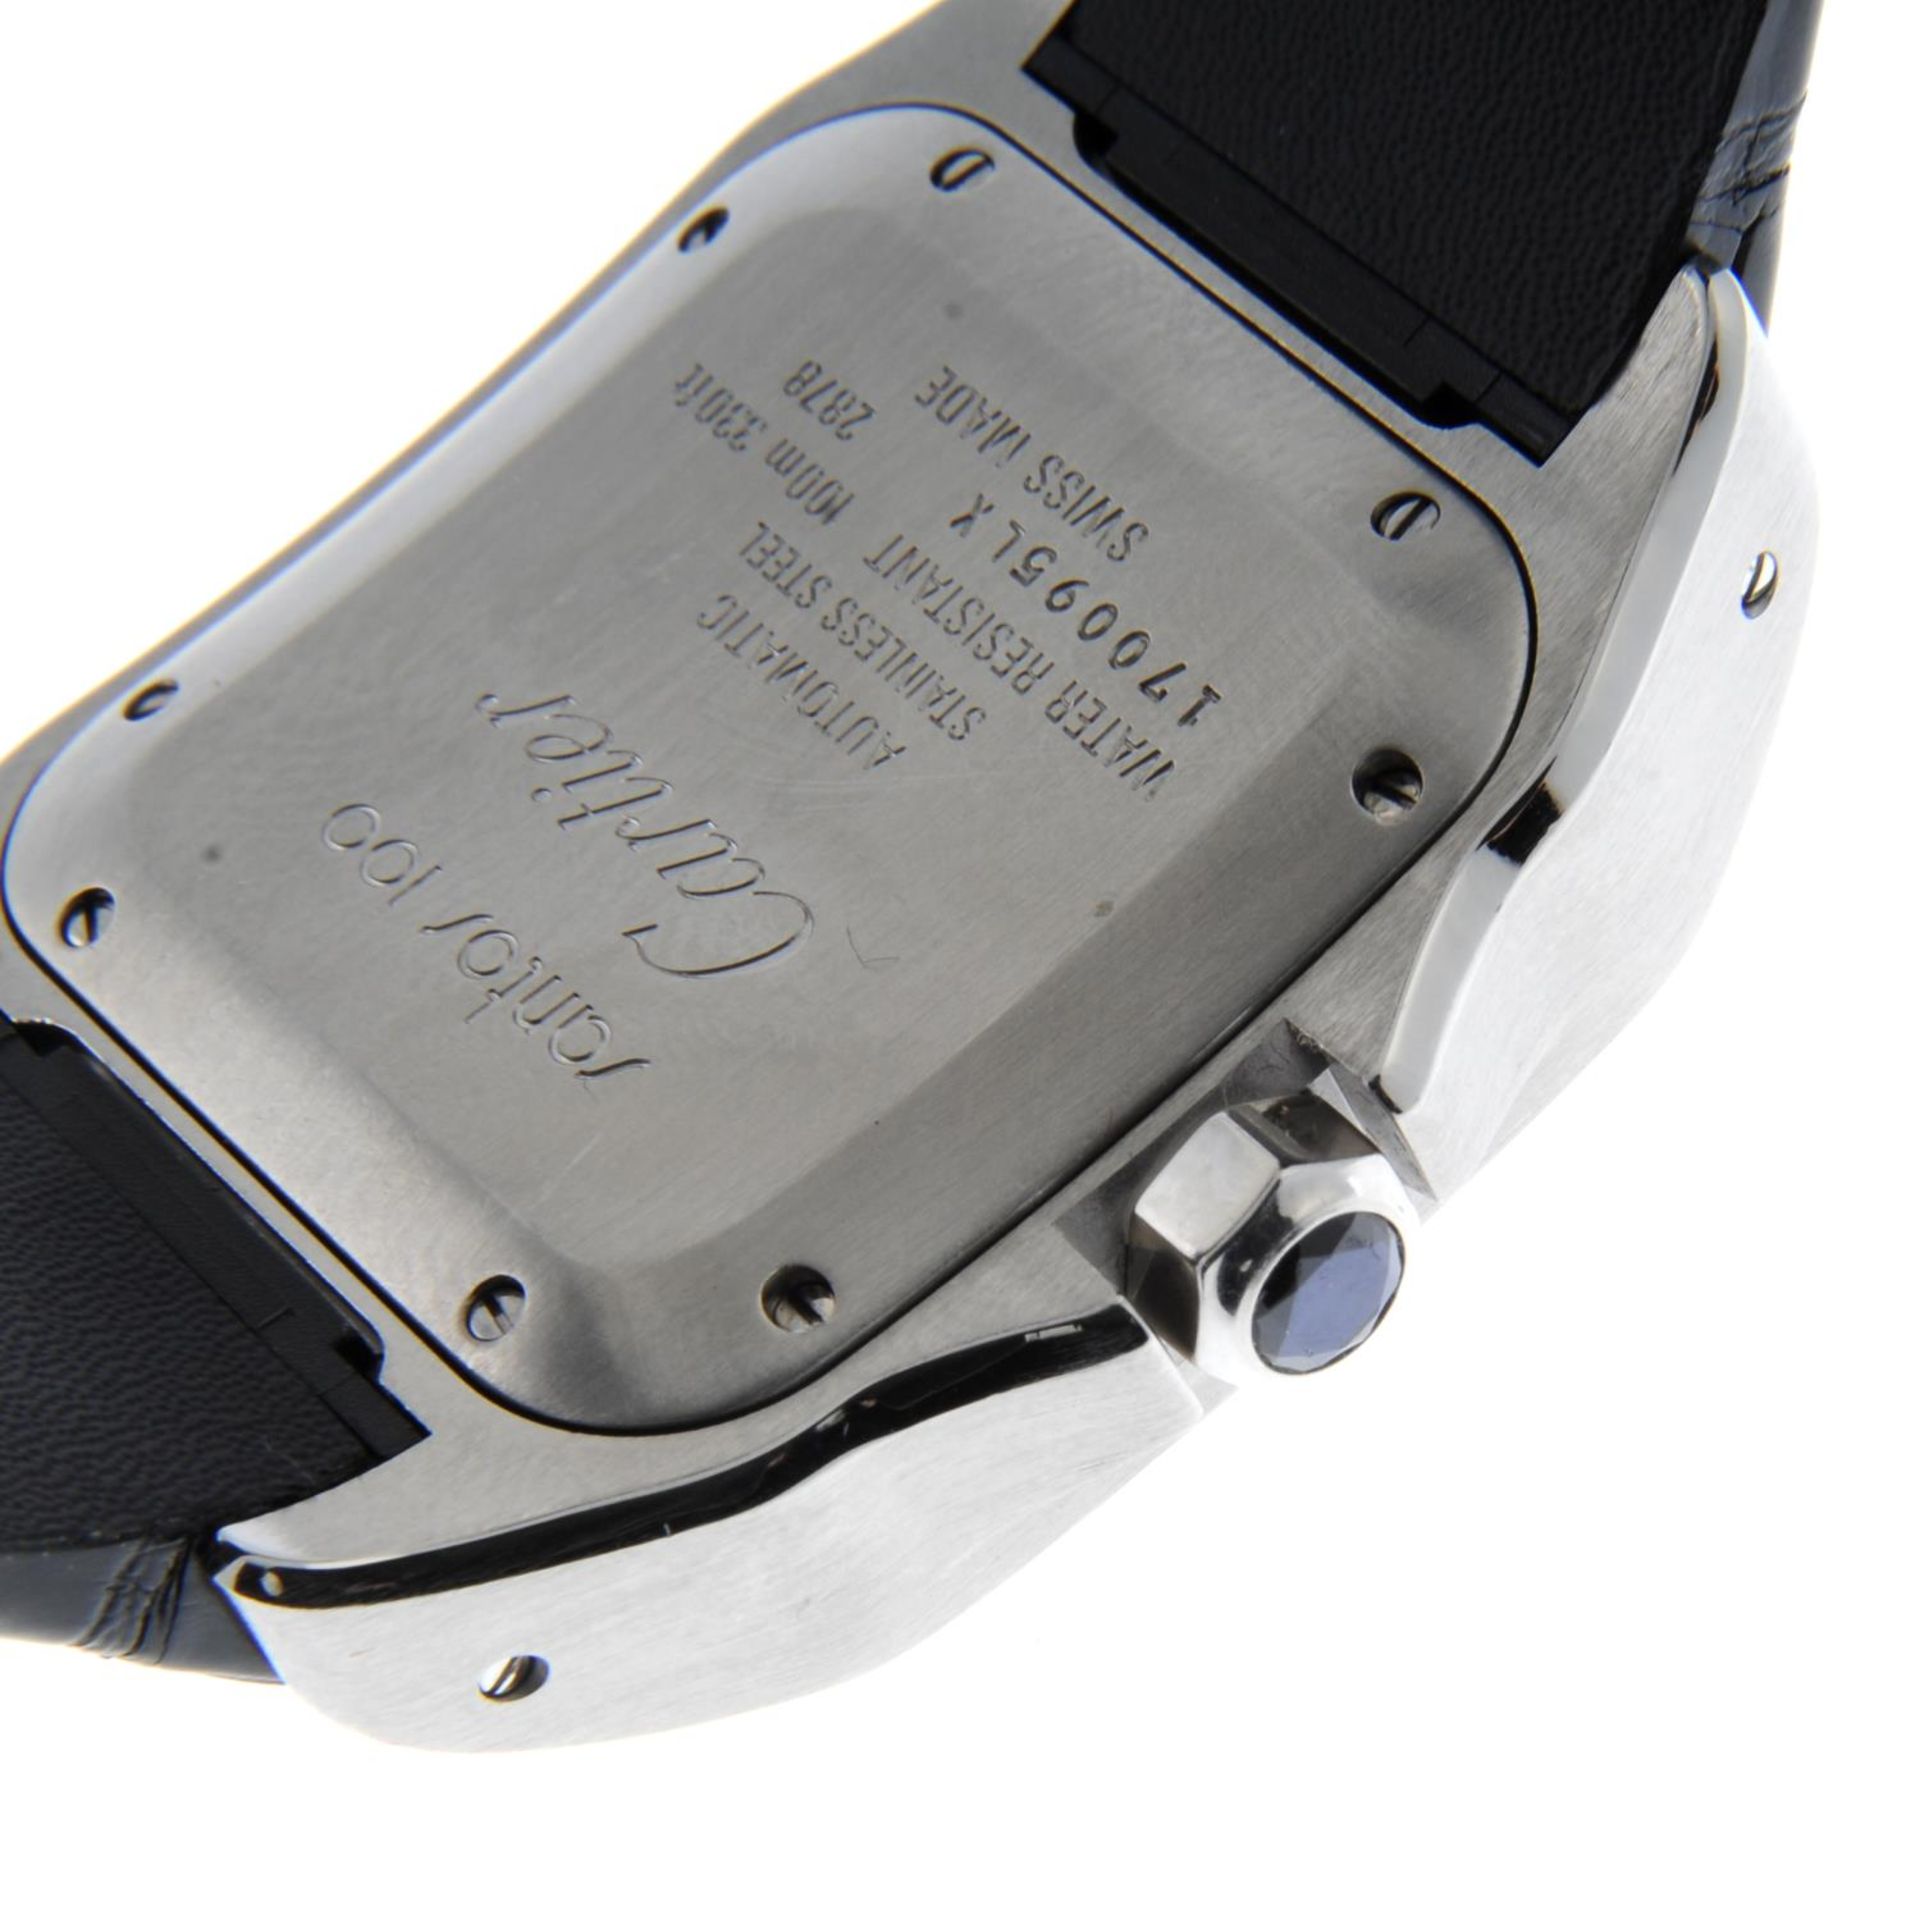 CARTIER - a Santos 100 wrist watch. - Image 2 of 5